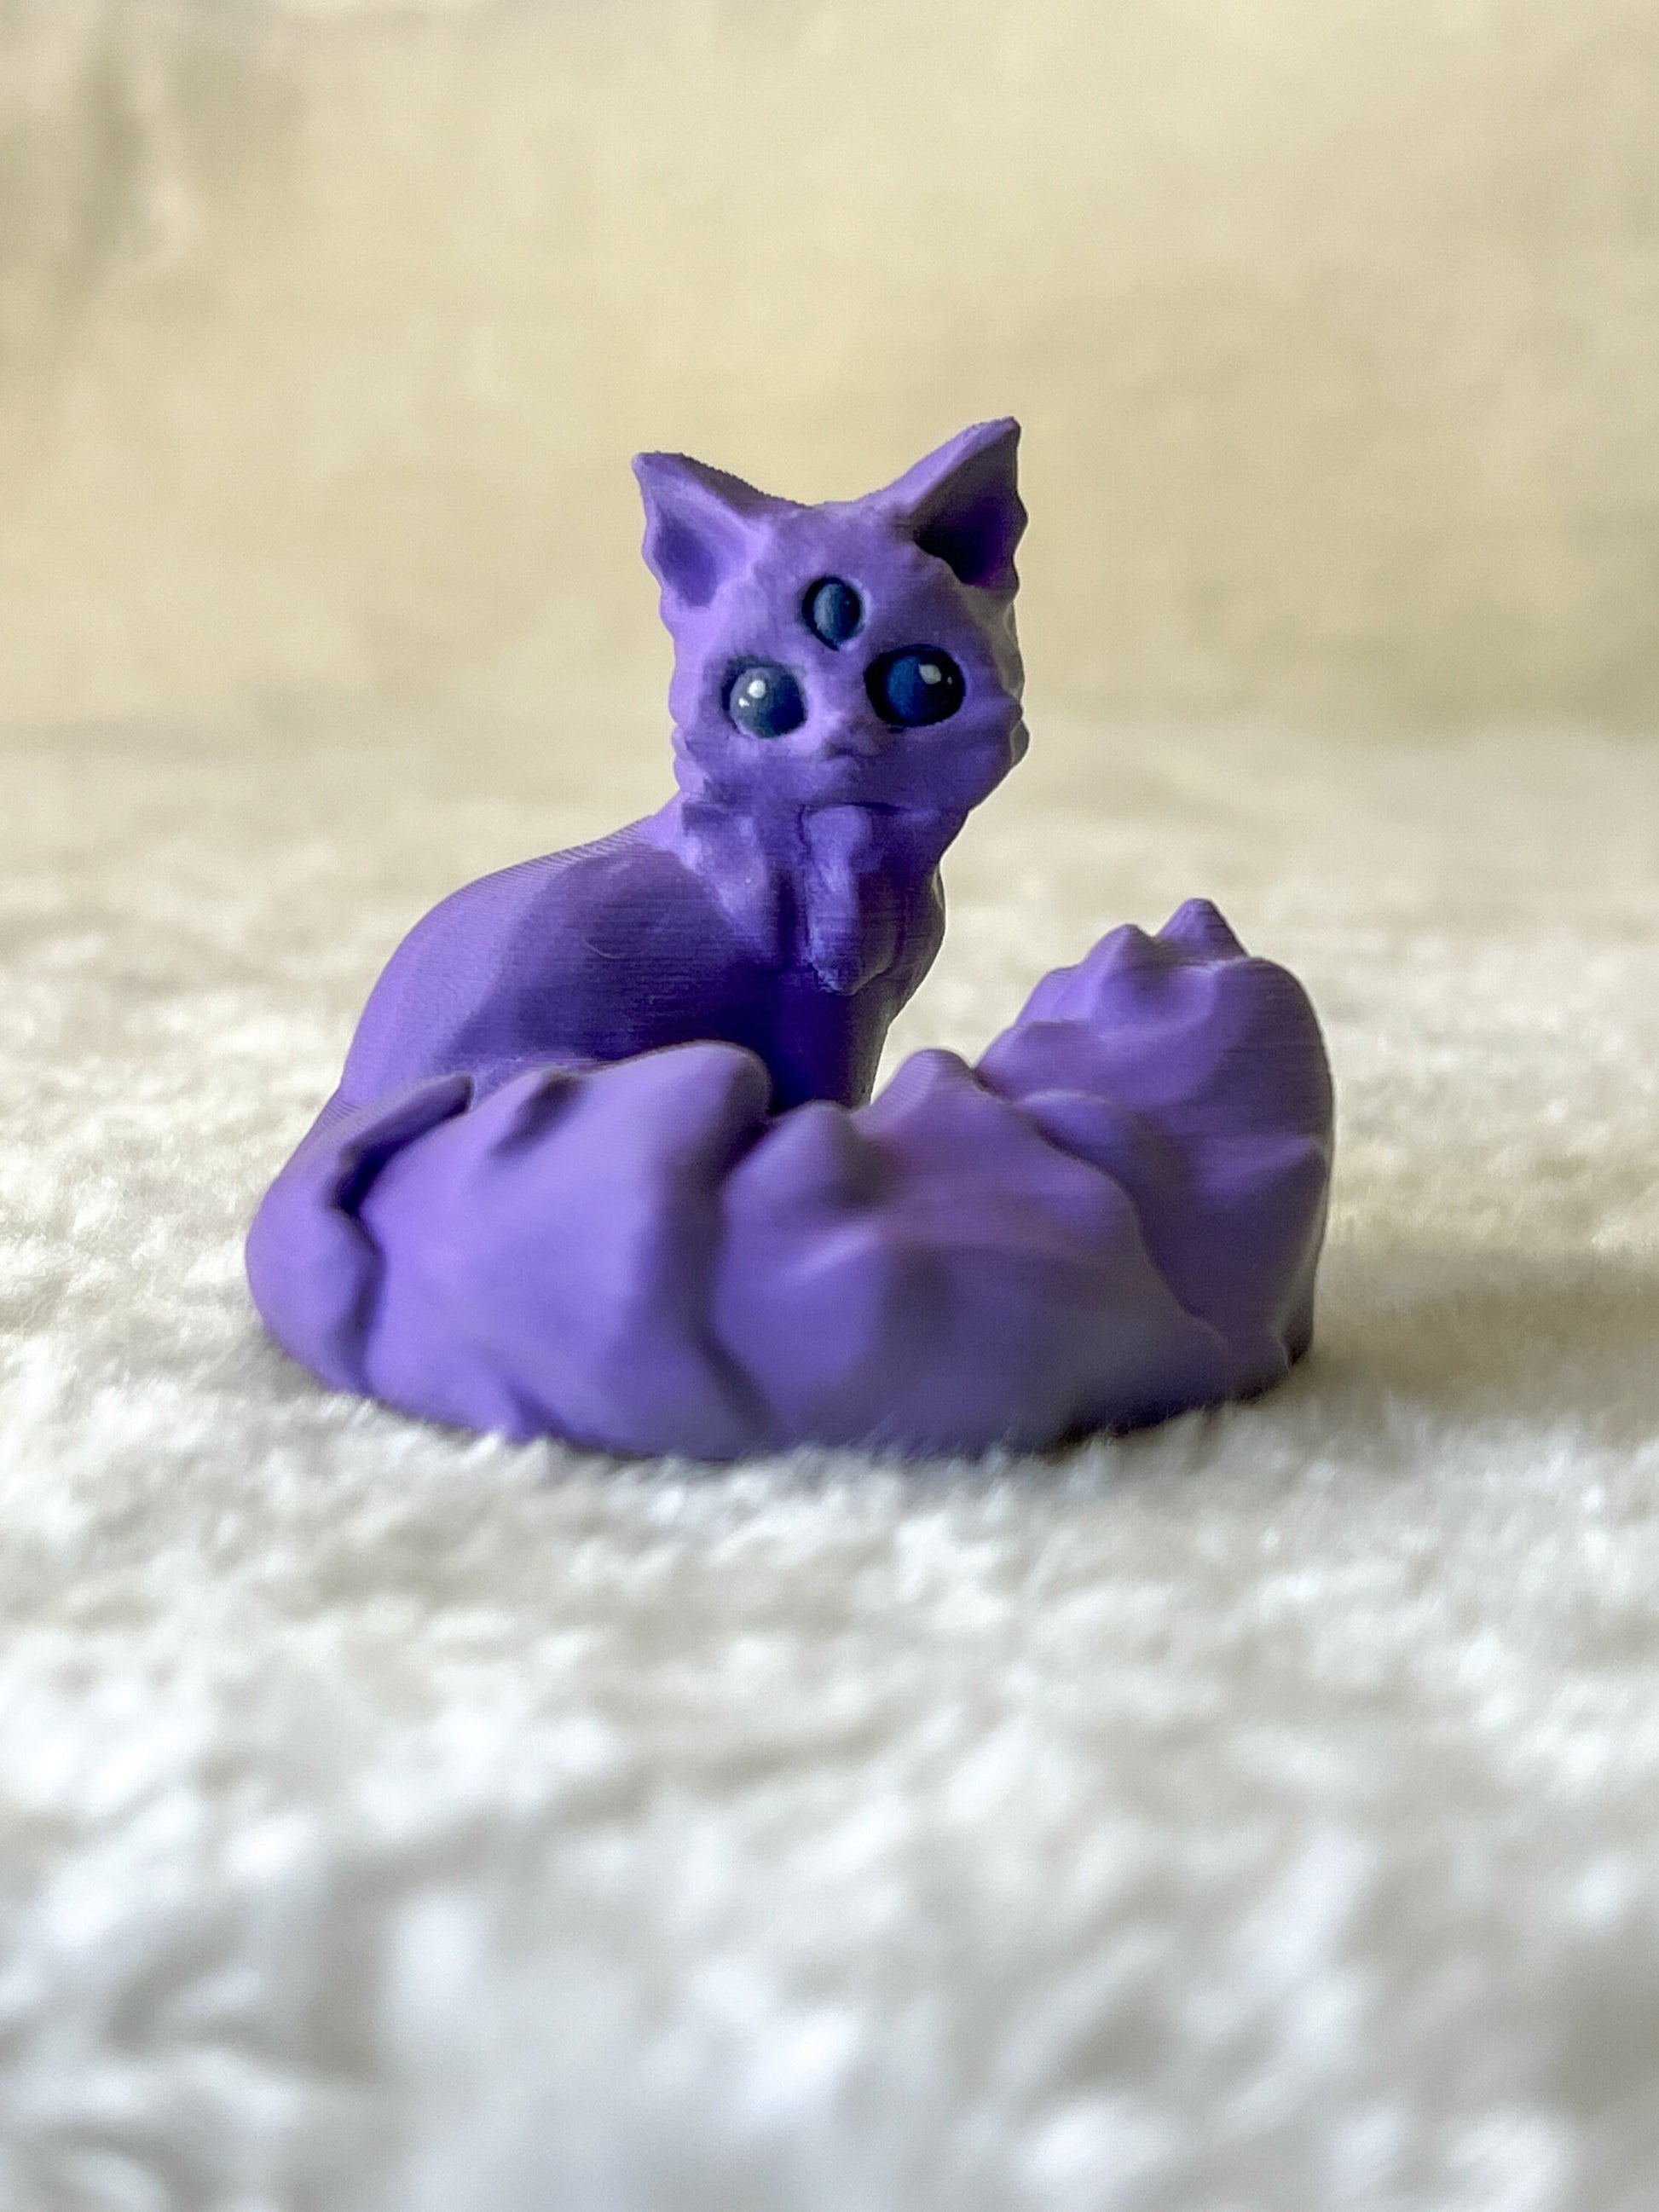 Acadia Fox | Desk Buddies, 3d Printed Toys, Desk Animals, Cute Animals, Desk Decor, Fox Figurines